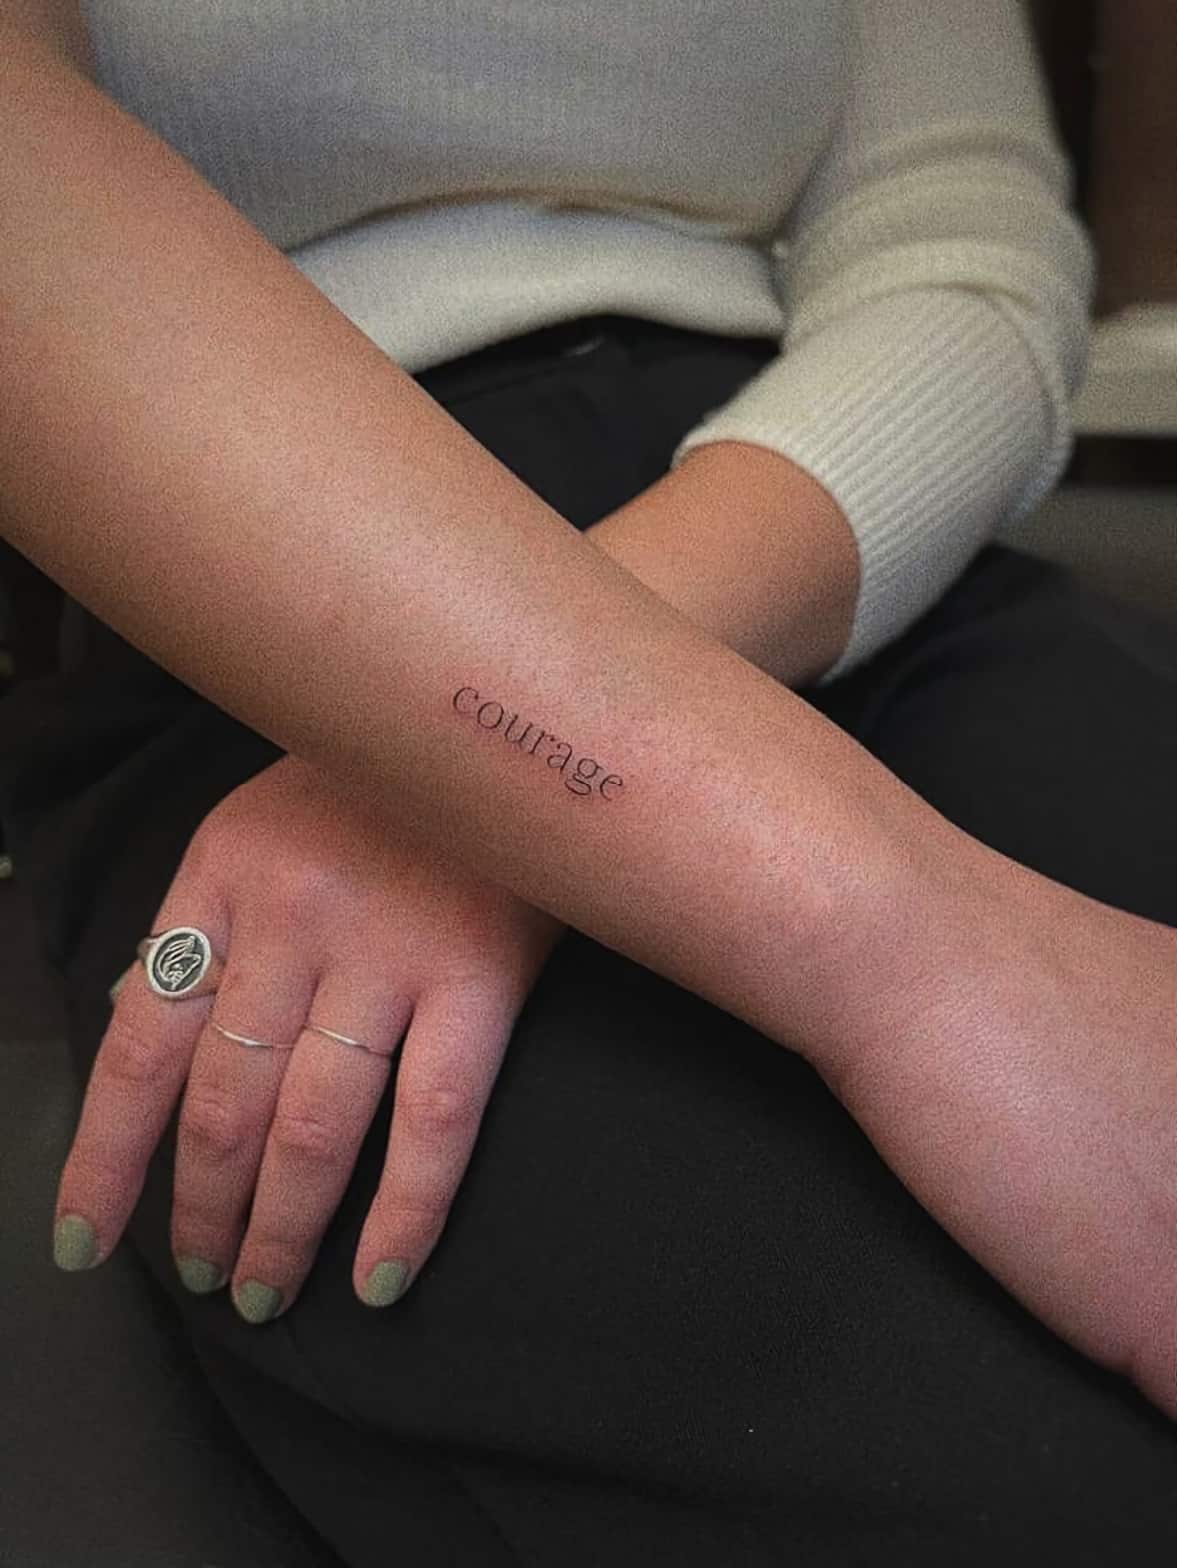 Palabras para tatuarse - Courage